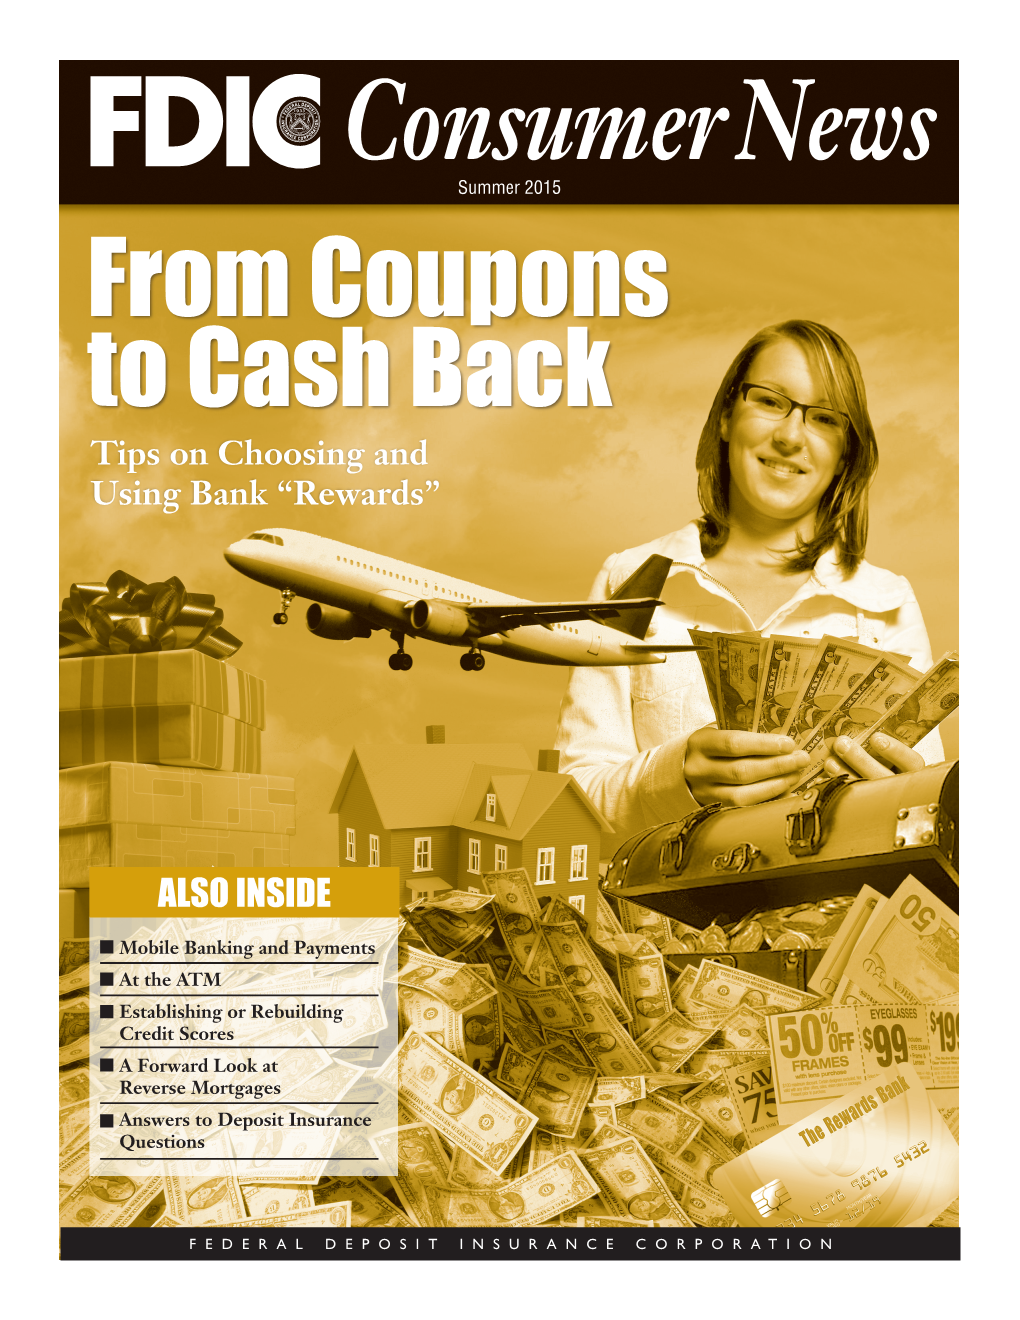 FDIC Consumer News Summer 2015 2 BANKING on the GO